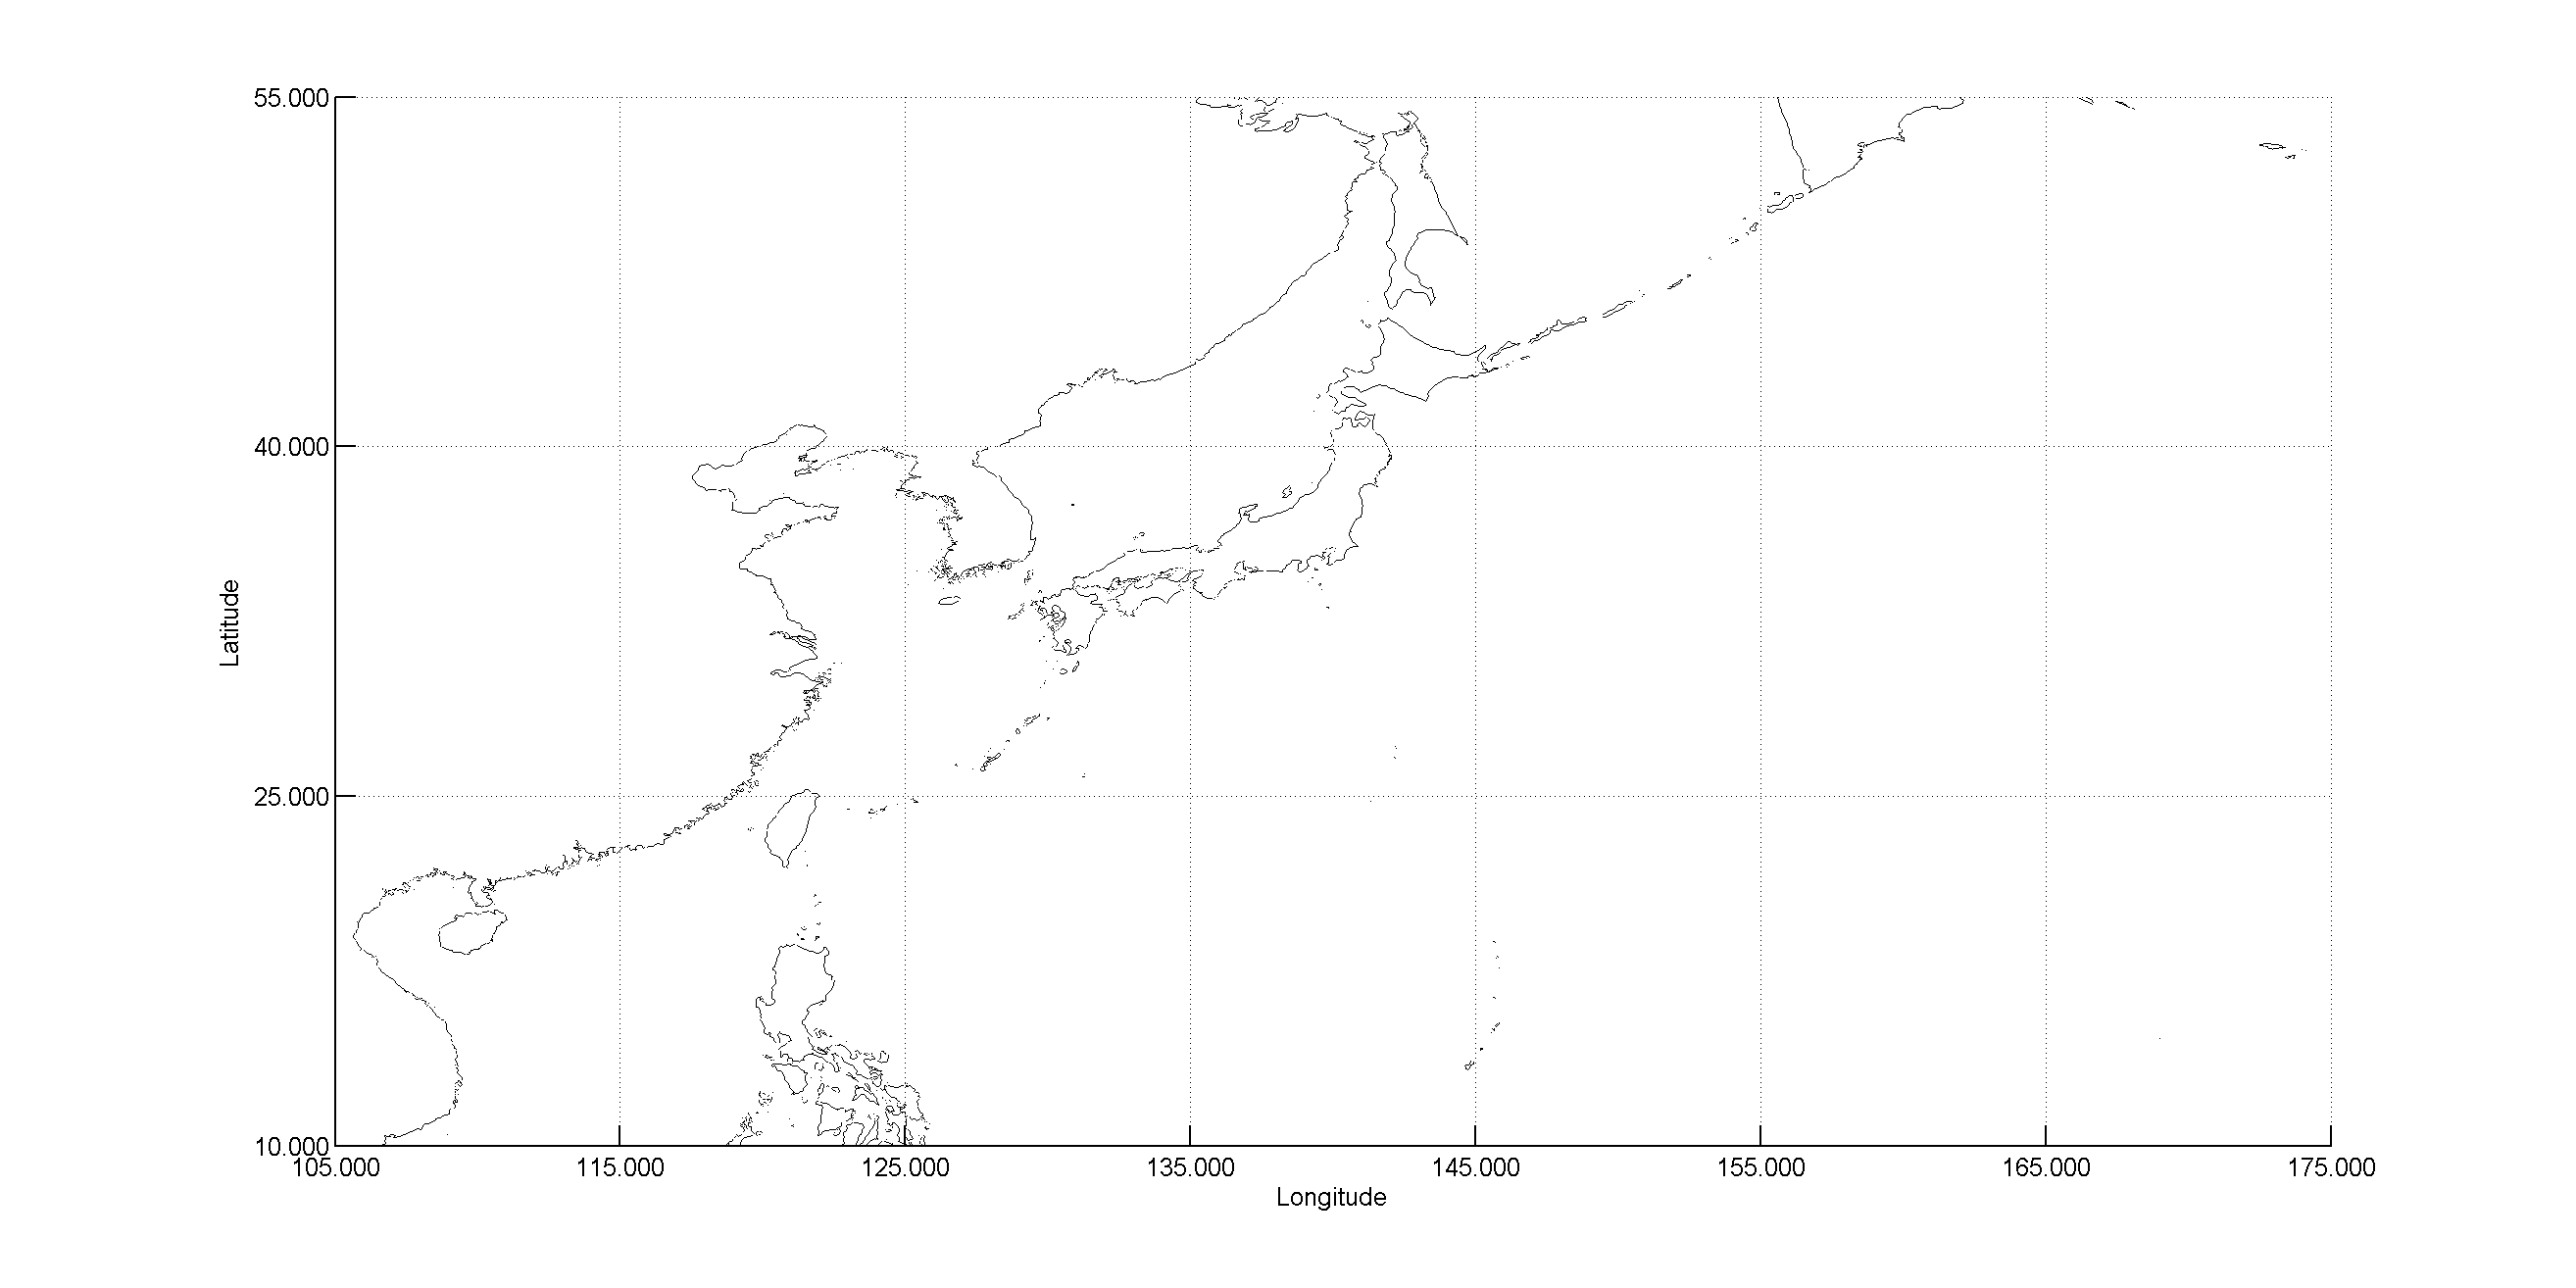 CYCLE_118 - Japan Descending passes